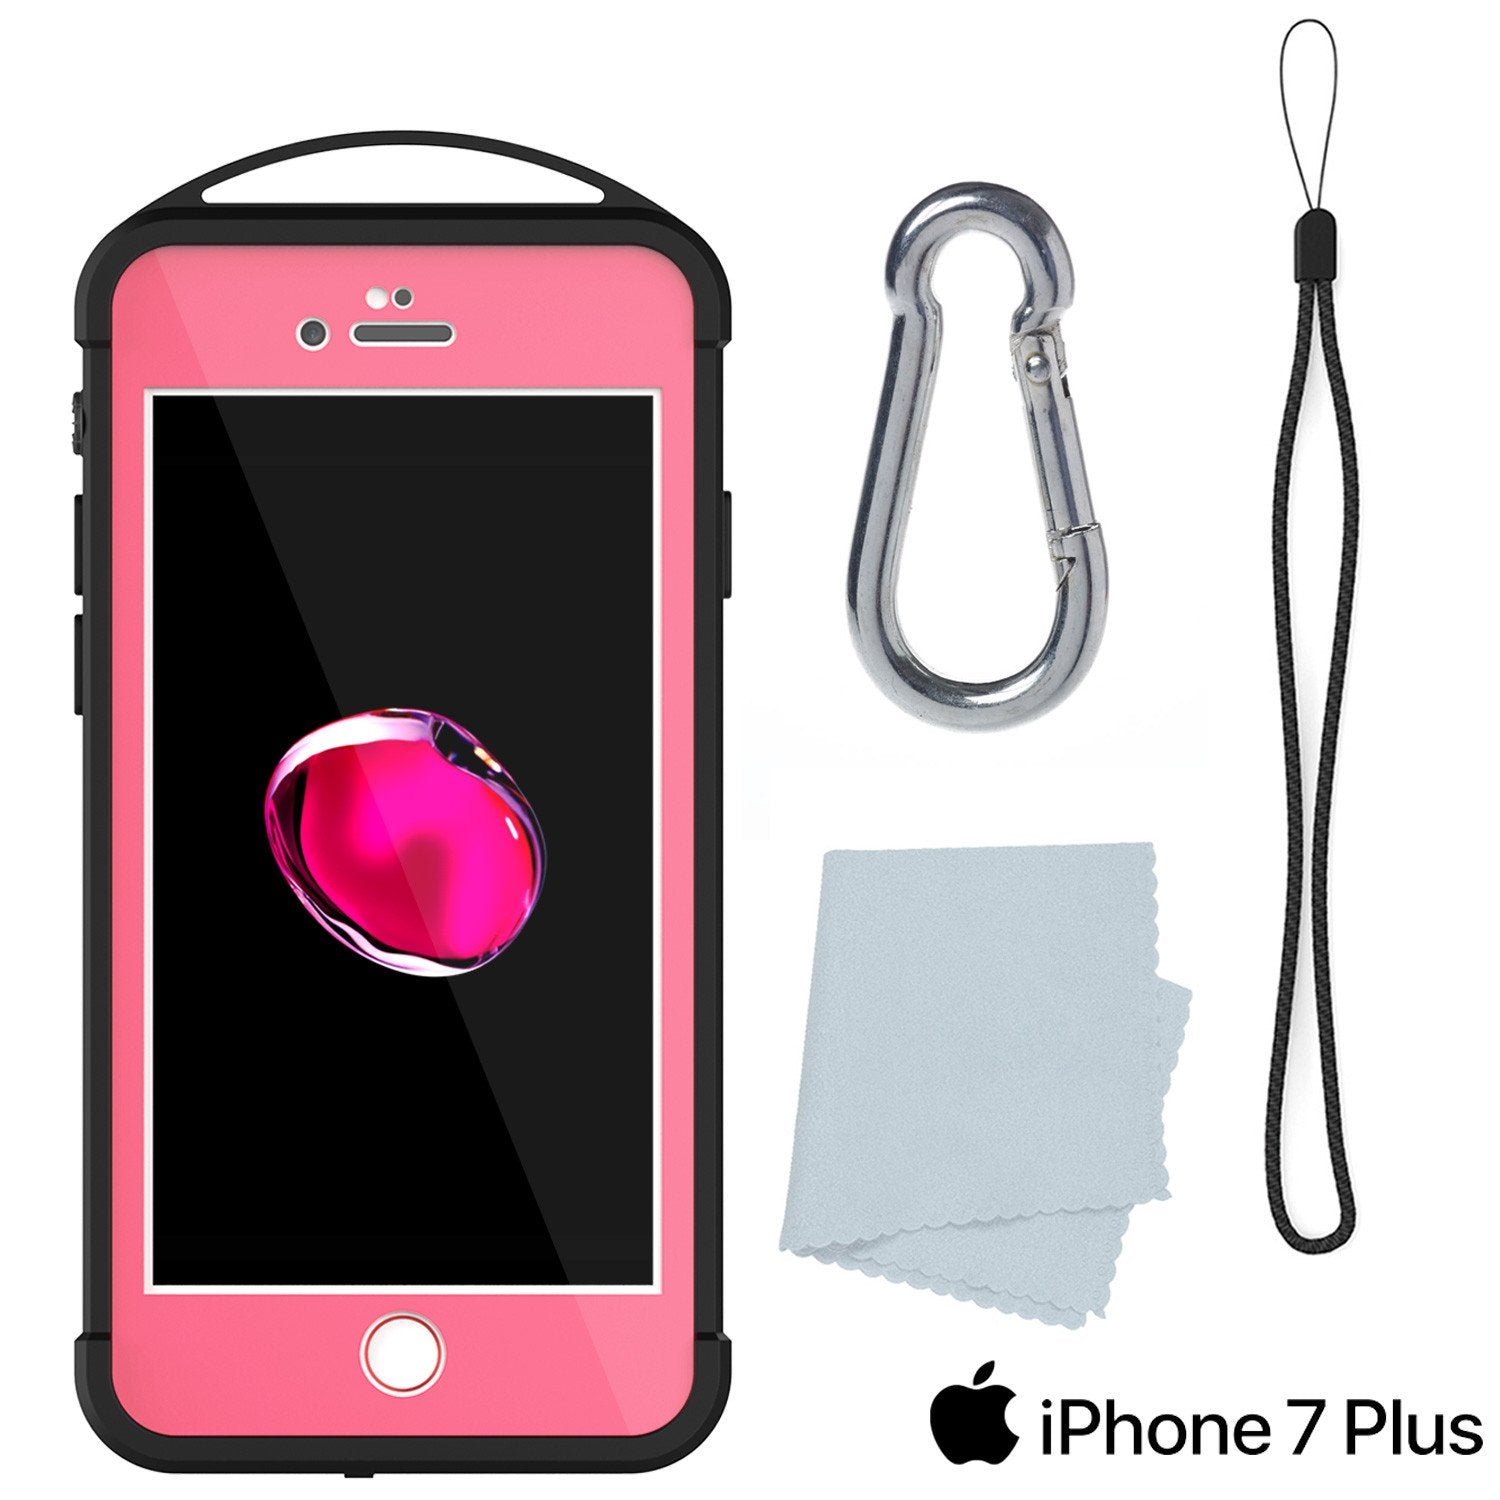 iPhone 7+ Plus Waterproof Case, Punkcase ALPINE Series, Pink | Heavy Duty Armor Cover